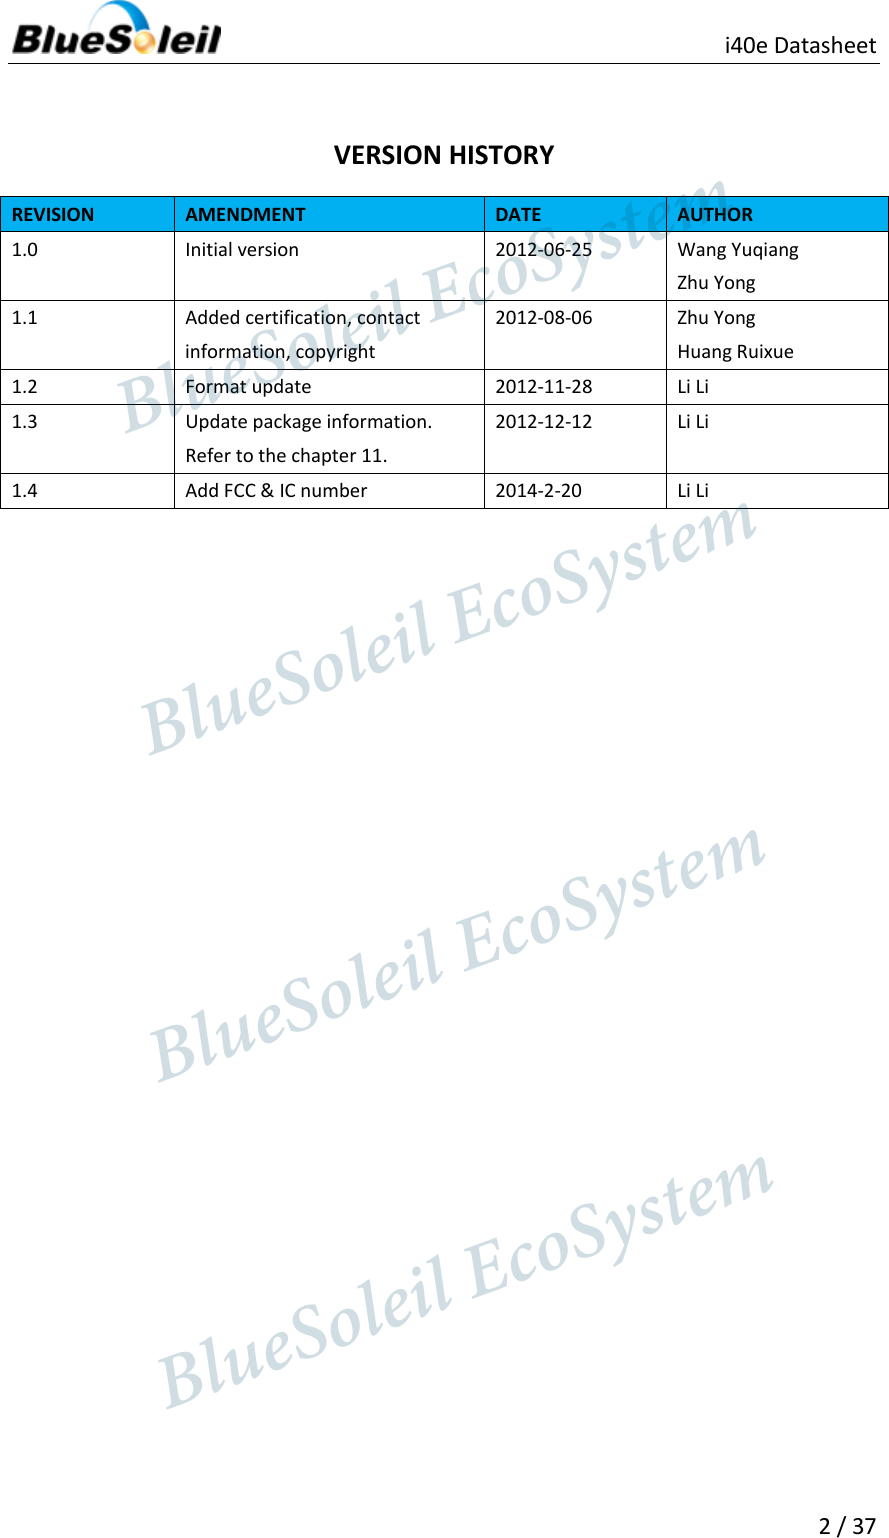                          i40e Datasheet   2 / 37   VERSION HISTORY REVISION AMENDMENT DATE AUTHOR 1.0 Initial version 2012-06-25 Wang Yuqiang Zhu Yong 1.1 Added certification, contact information, copyright 2012-08-06 Zhu Yong   Huang Ruixue 1.2 Format update 2012-11-28 Li Li 1.3 Update package information. Refer to the chapter 11. 2012-12-12 Li Li 1.4 Add FCC &amp; IC number 2014-2-20 Li Li                   BlueSoleil EcoSystem            BlueSoleil EcoSystem      BlueSoleil EcoSystemBlueSoleil EcoSystem